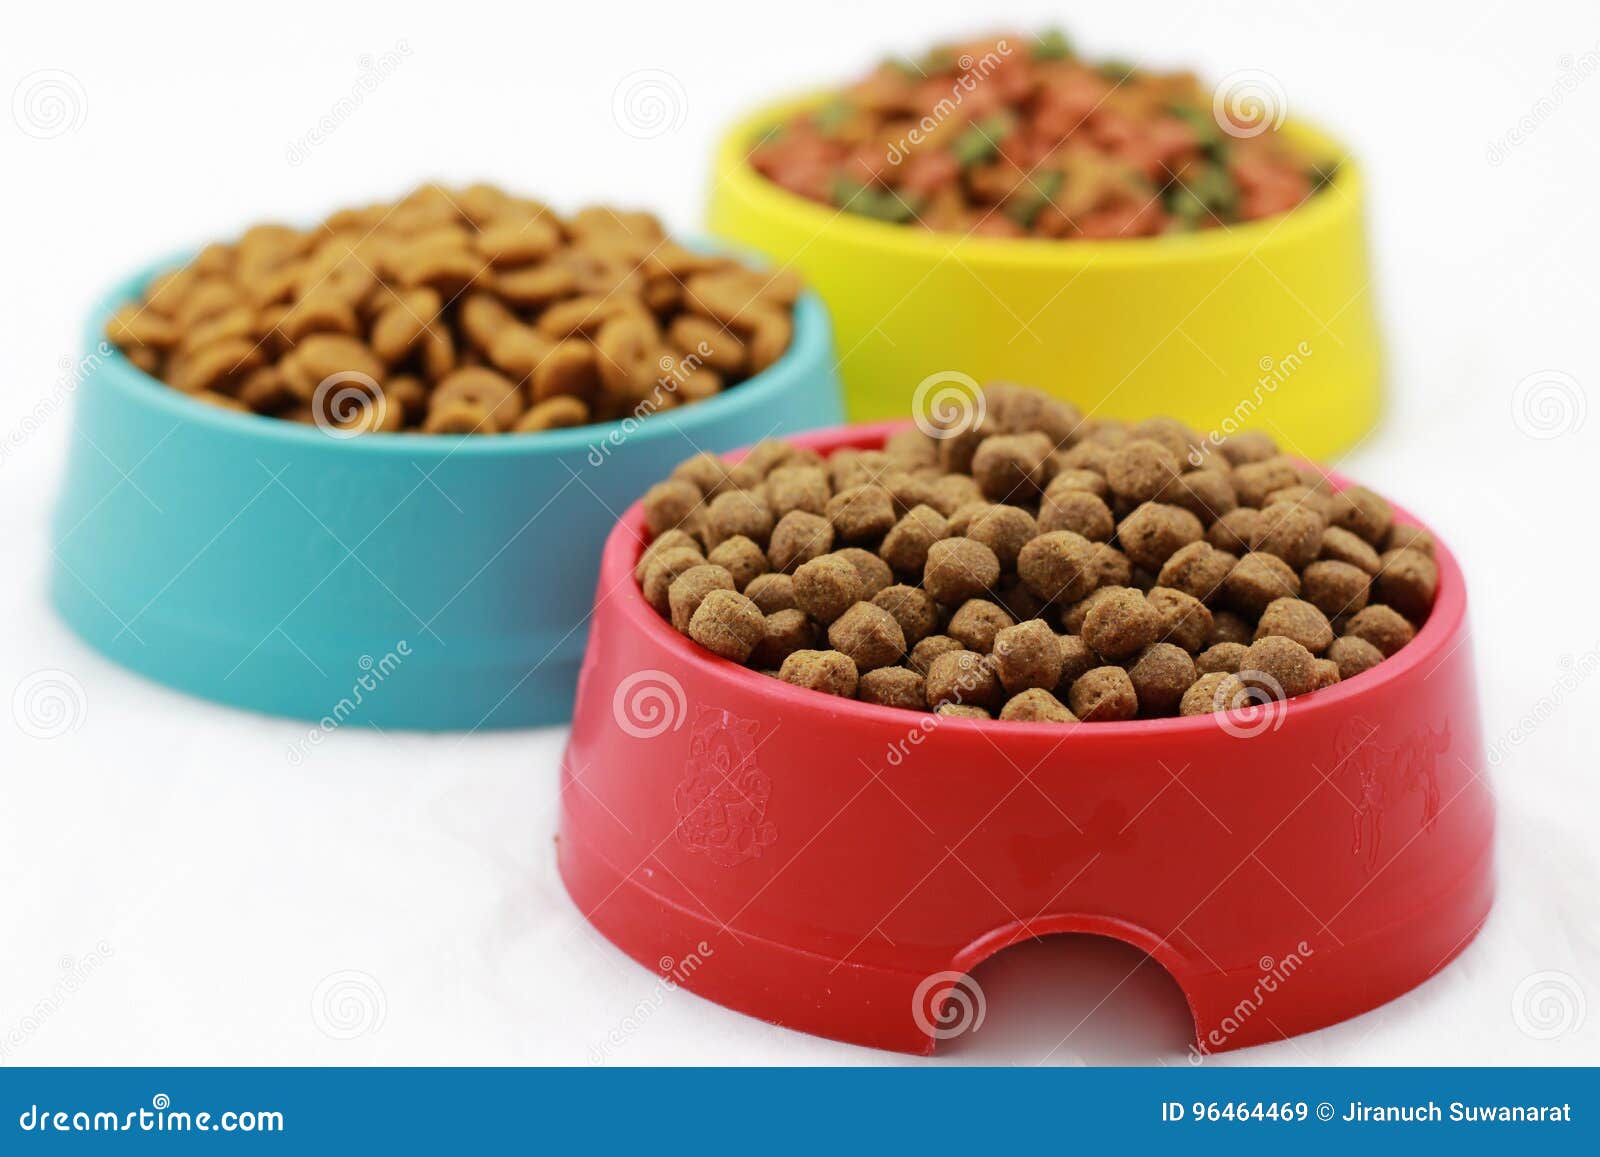 Maakte zich klaar censuur koel Dog`s pellets in bowl stock image. Image of care, isolated - 96464469